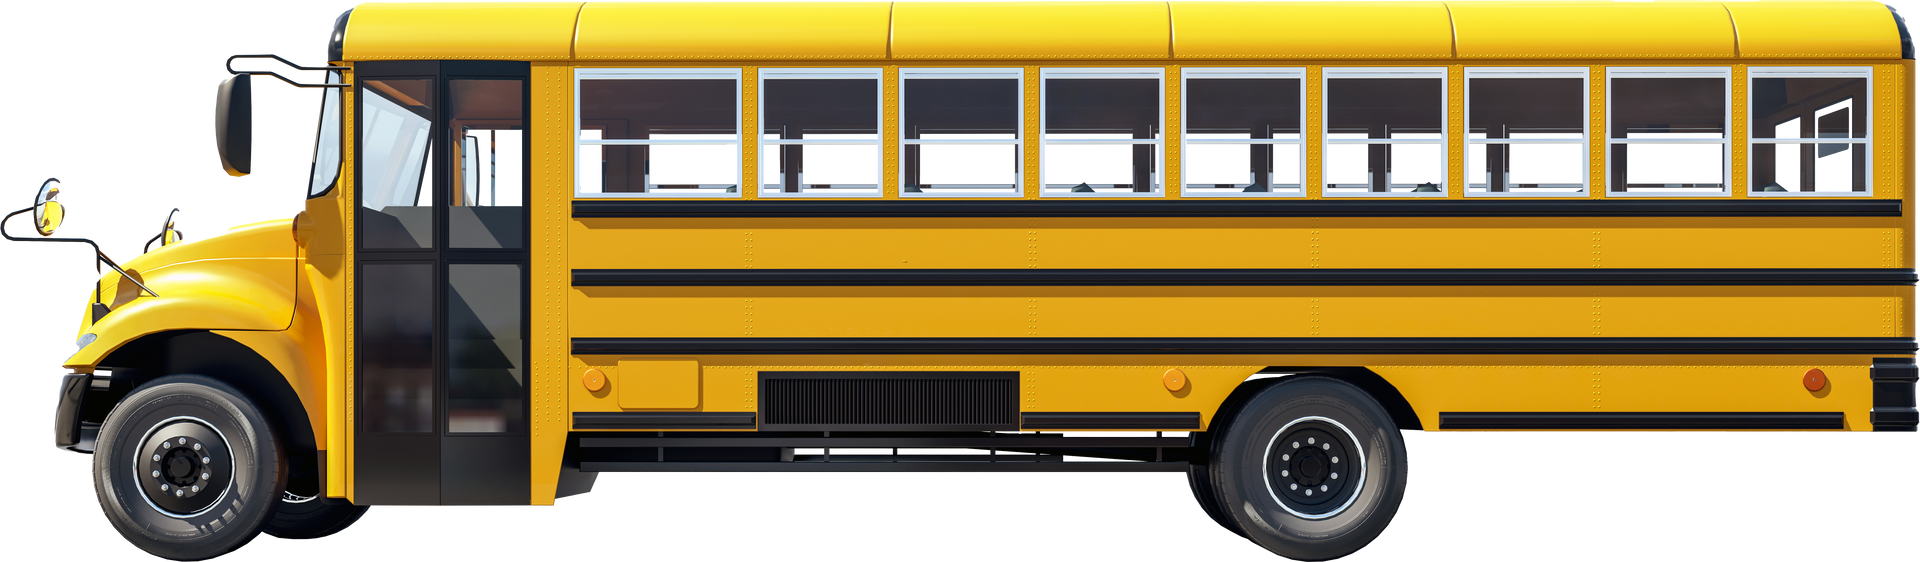 a yellow school bus with the door open | Riley's Auto & Diesel Repairs LLC